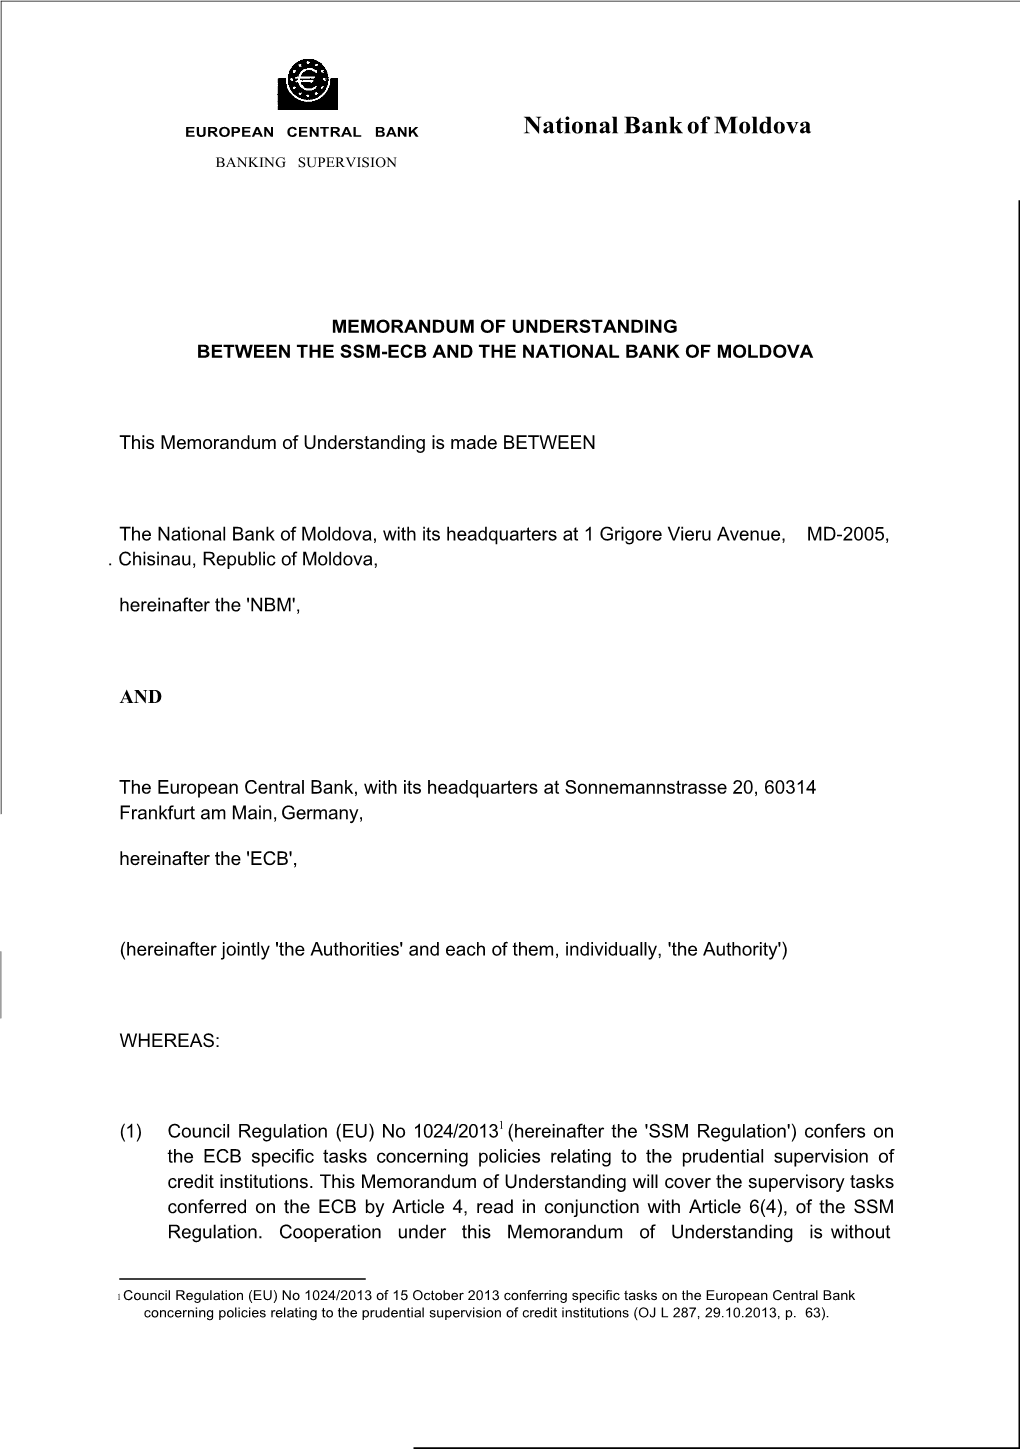 Memorandum of Understanding Between the ECB and the National Bank of Moldova